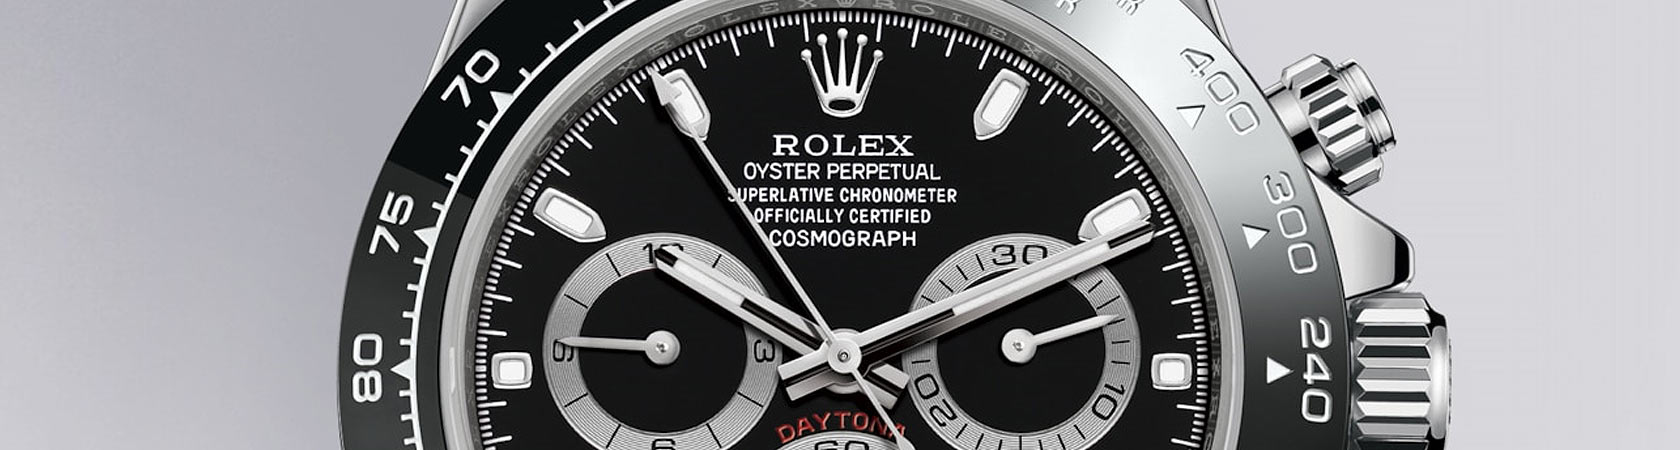 Rolex Singapore Daytona m116500ln 0002